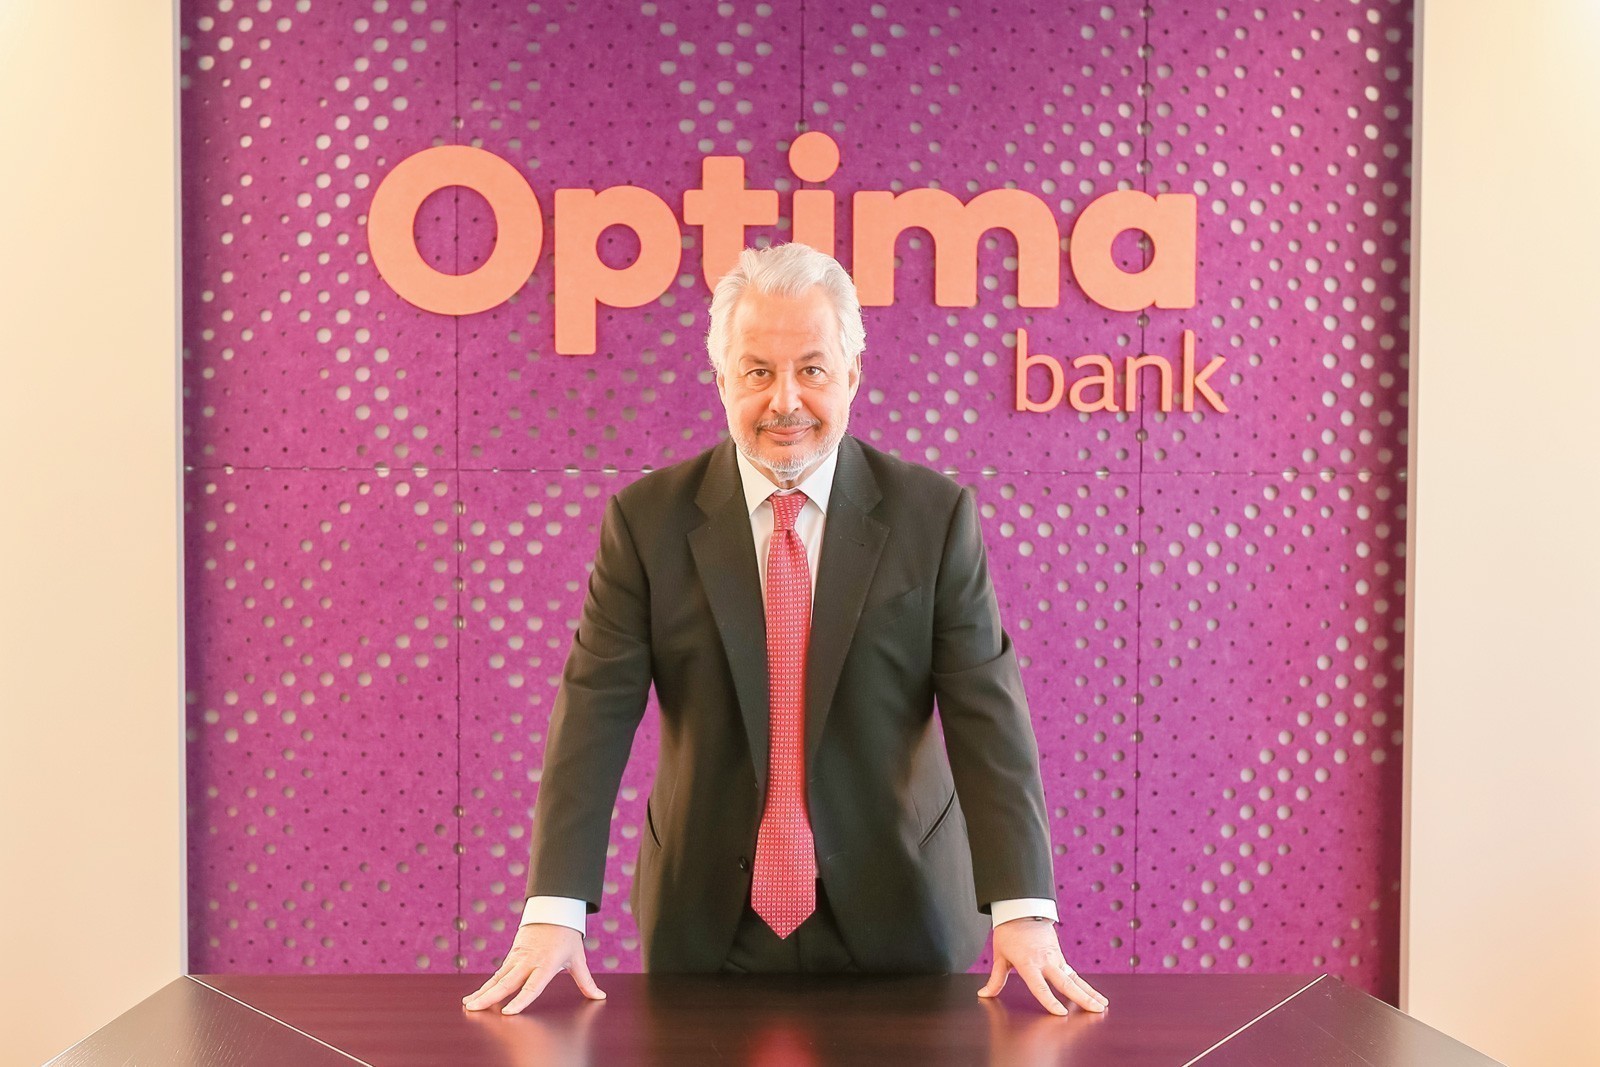 Optima bank: Στόχος η υπερκάλυψη της ΑΜΚ – Το success story που την οδήγησε στην «πόρτα» του ΧΑ